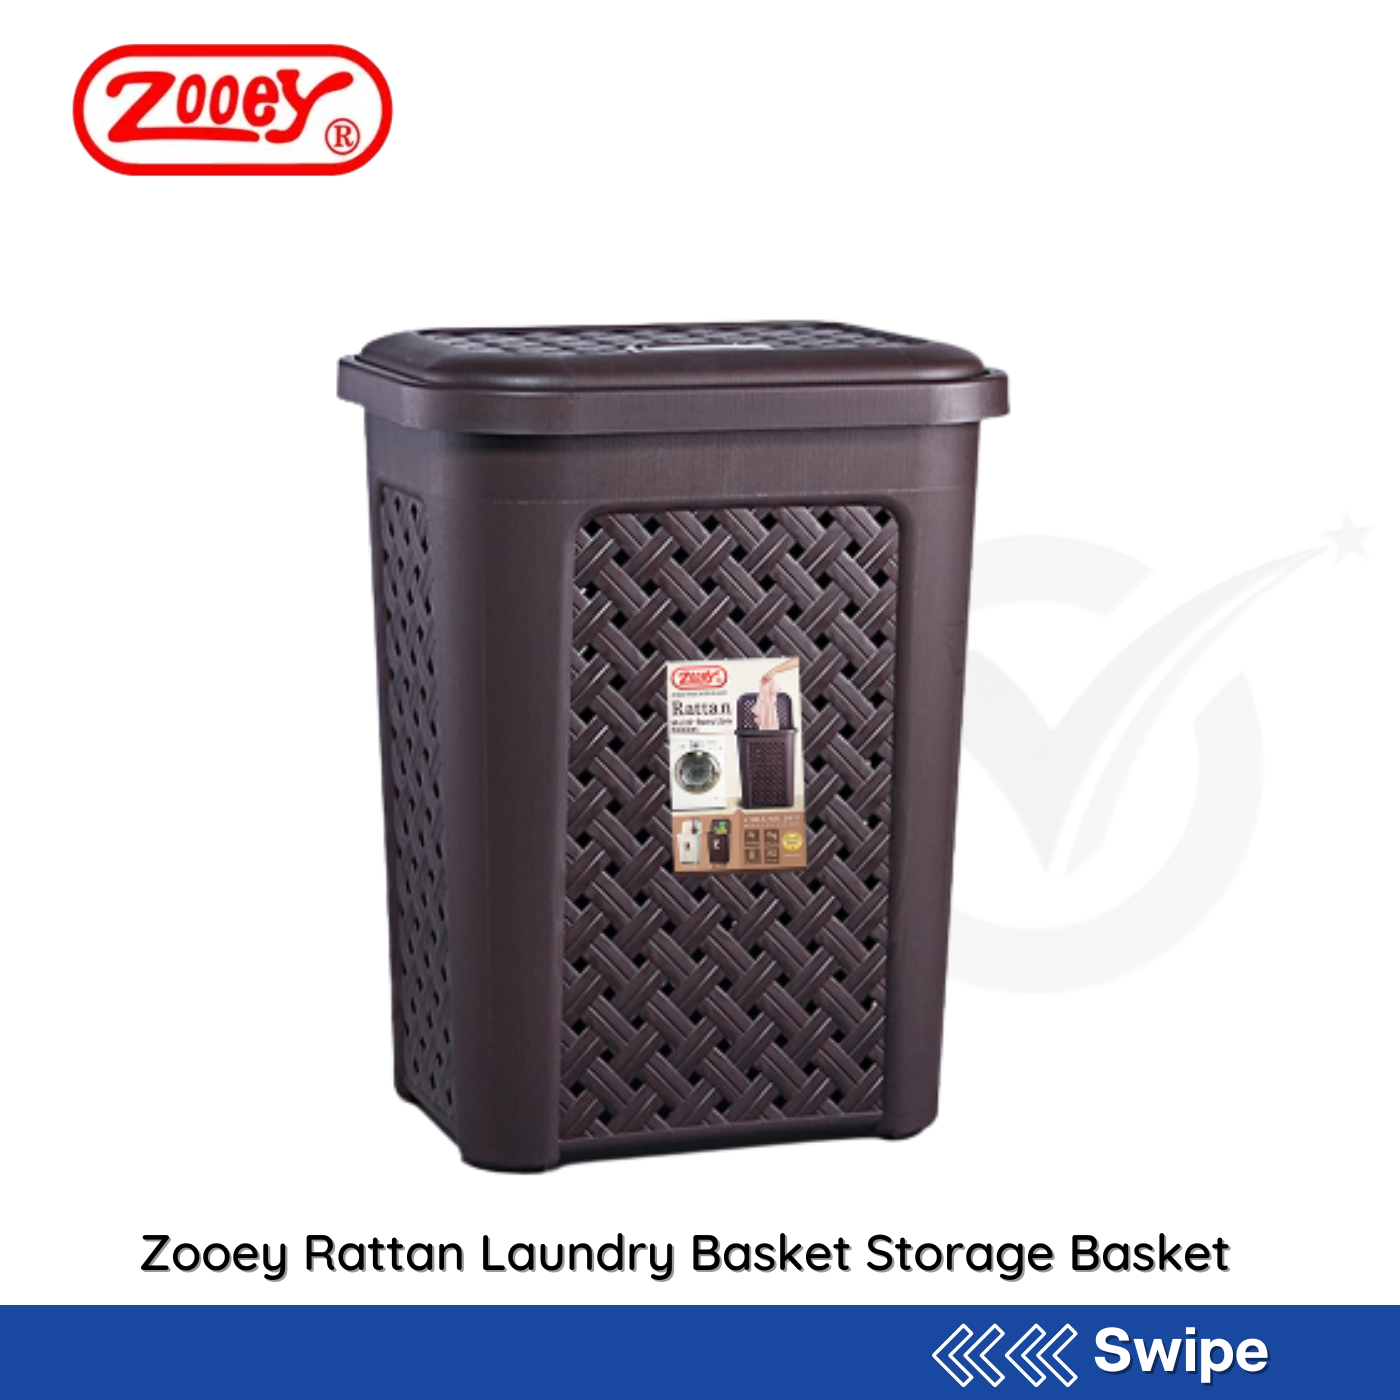 Zooey Rattan Laundry Basket Storage Basket